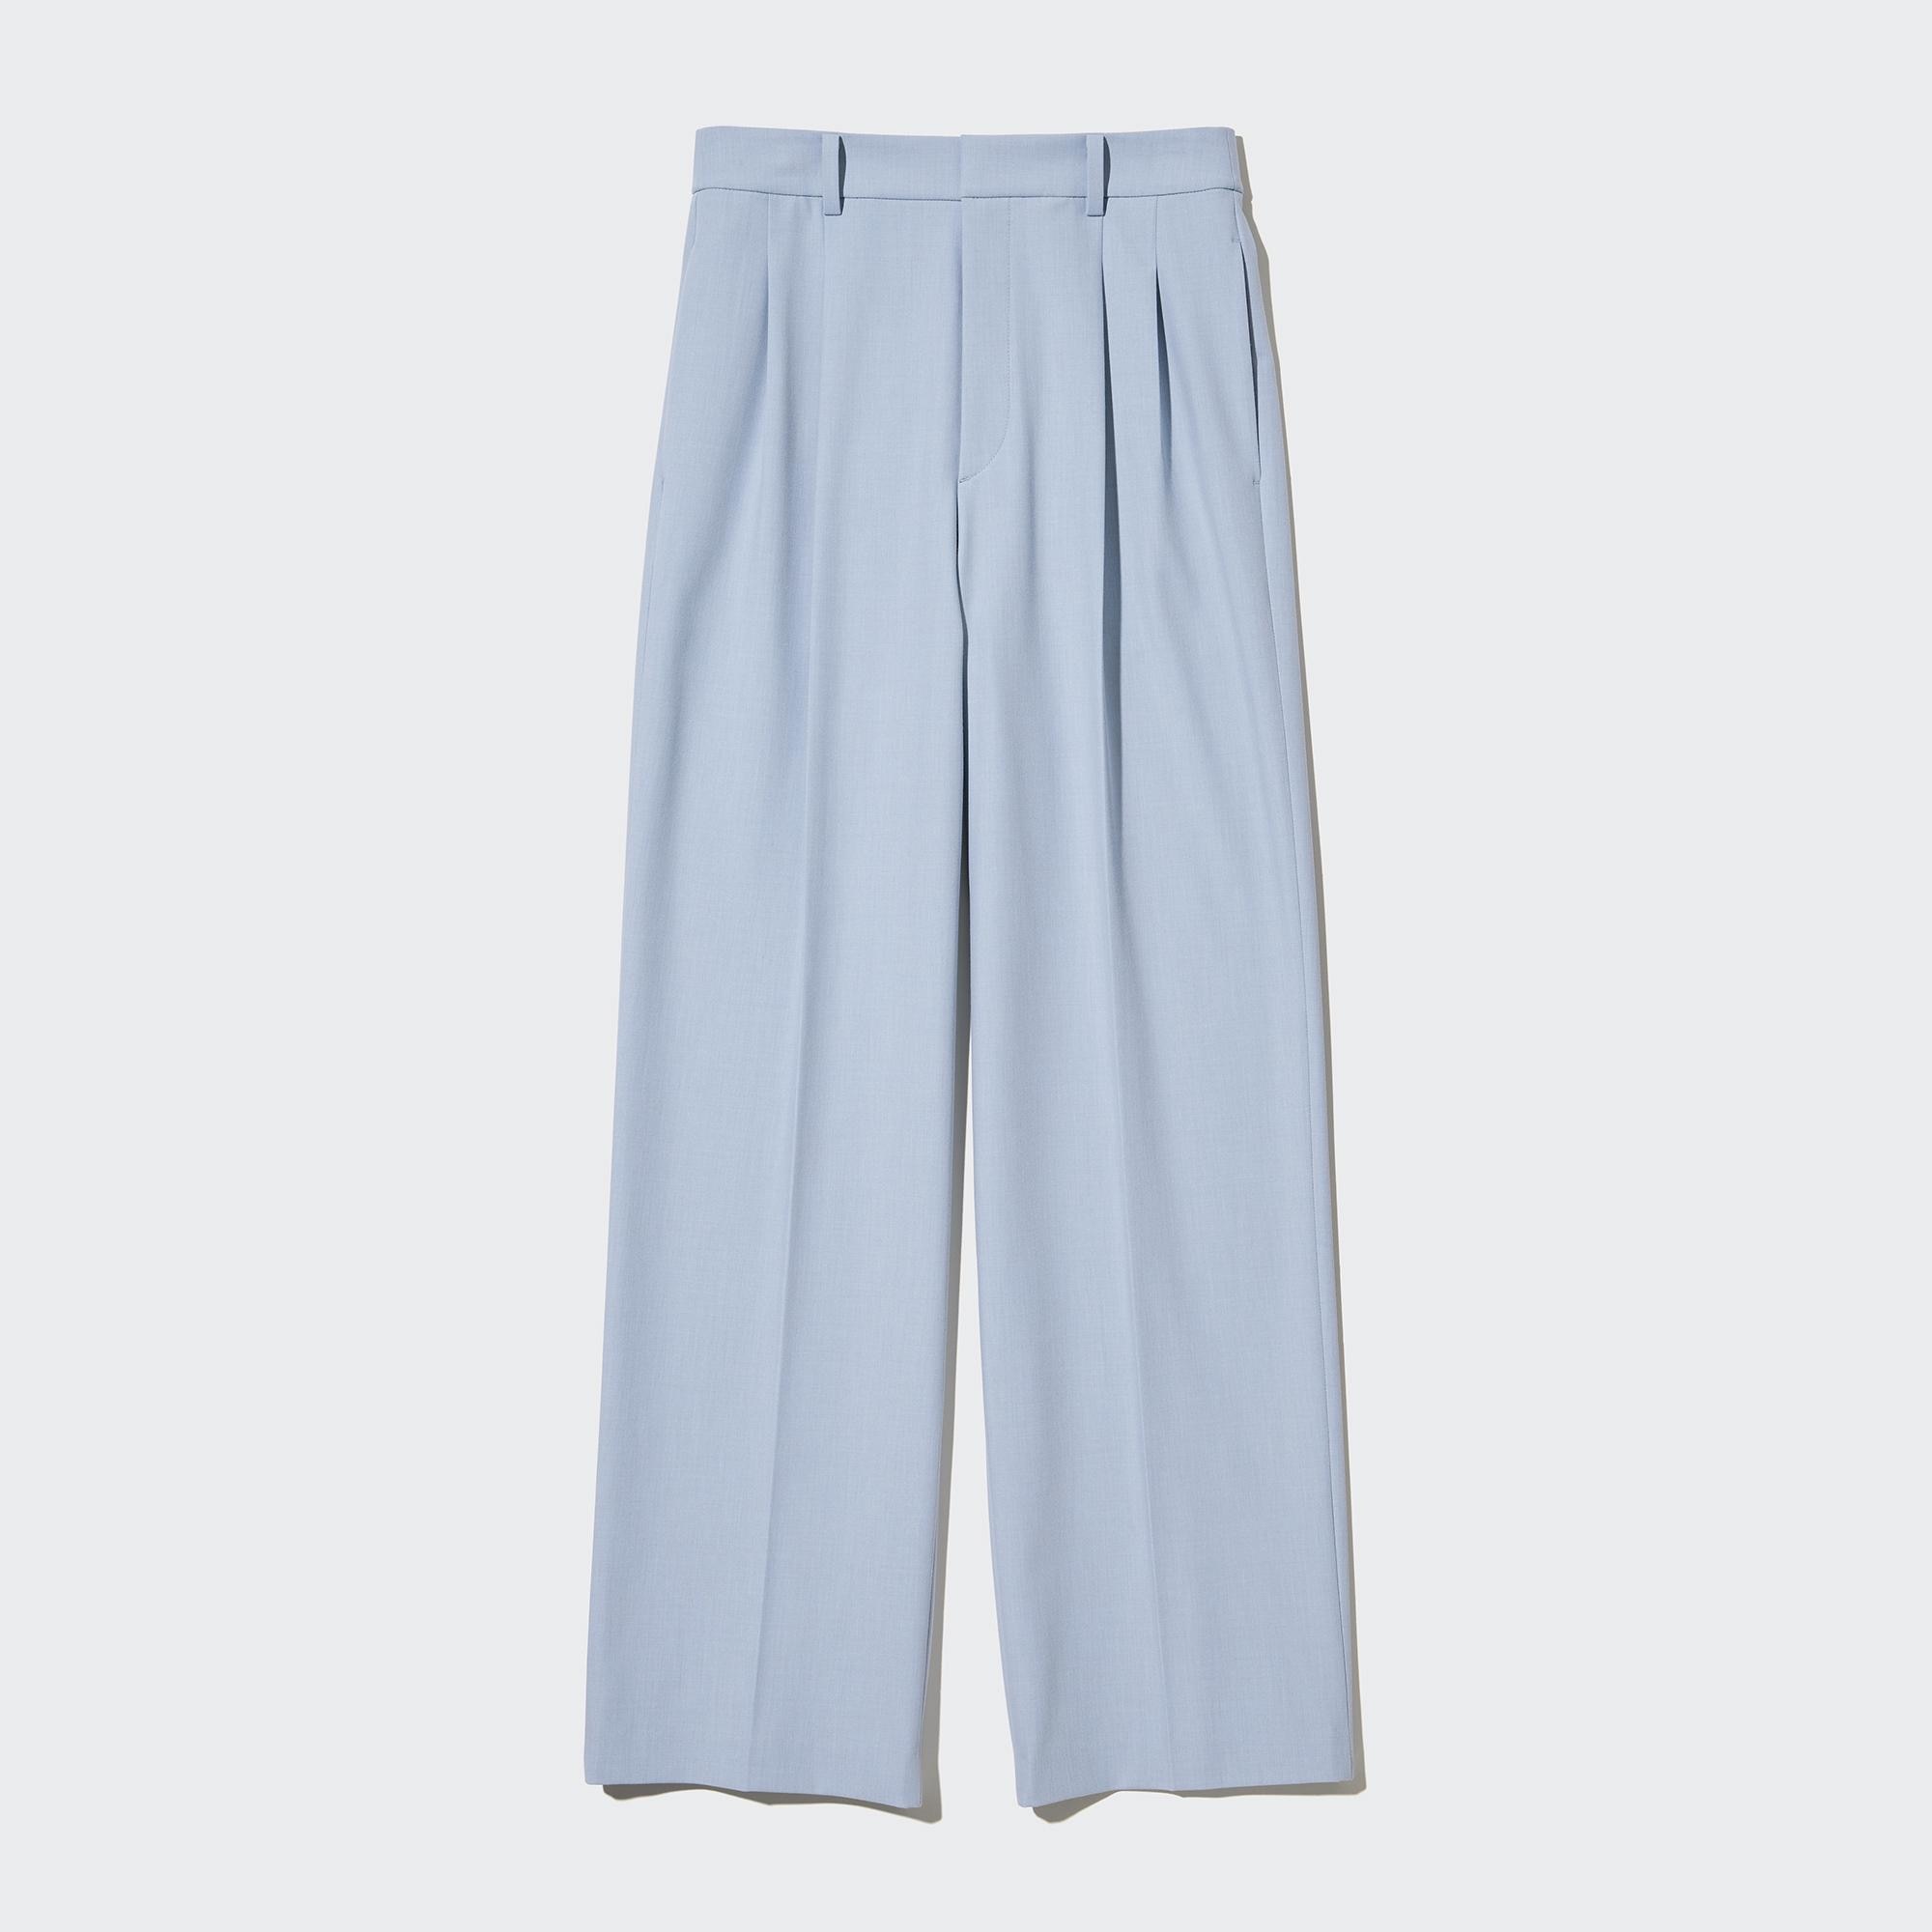 UNIQLO Ultra Stretch Comfort Pants | StyleHint